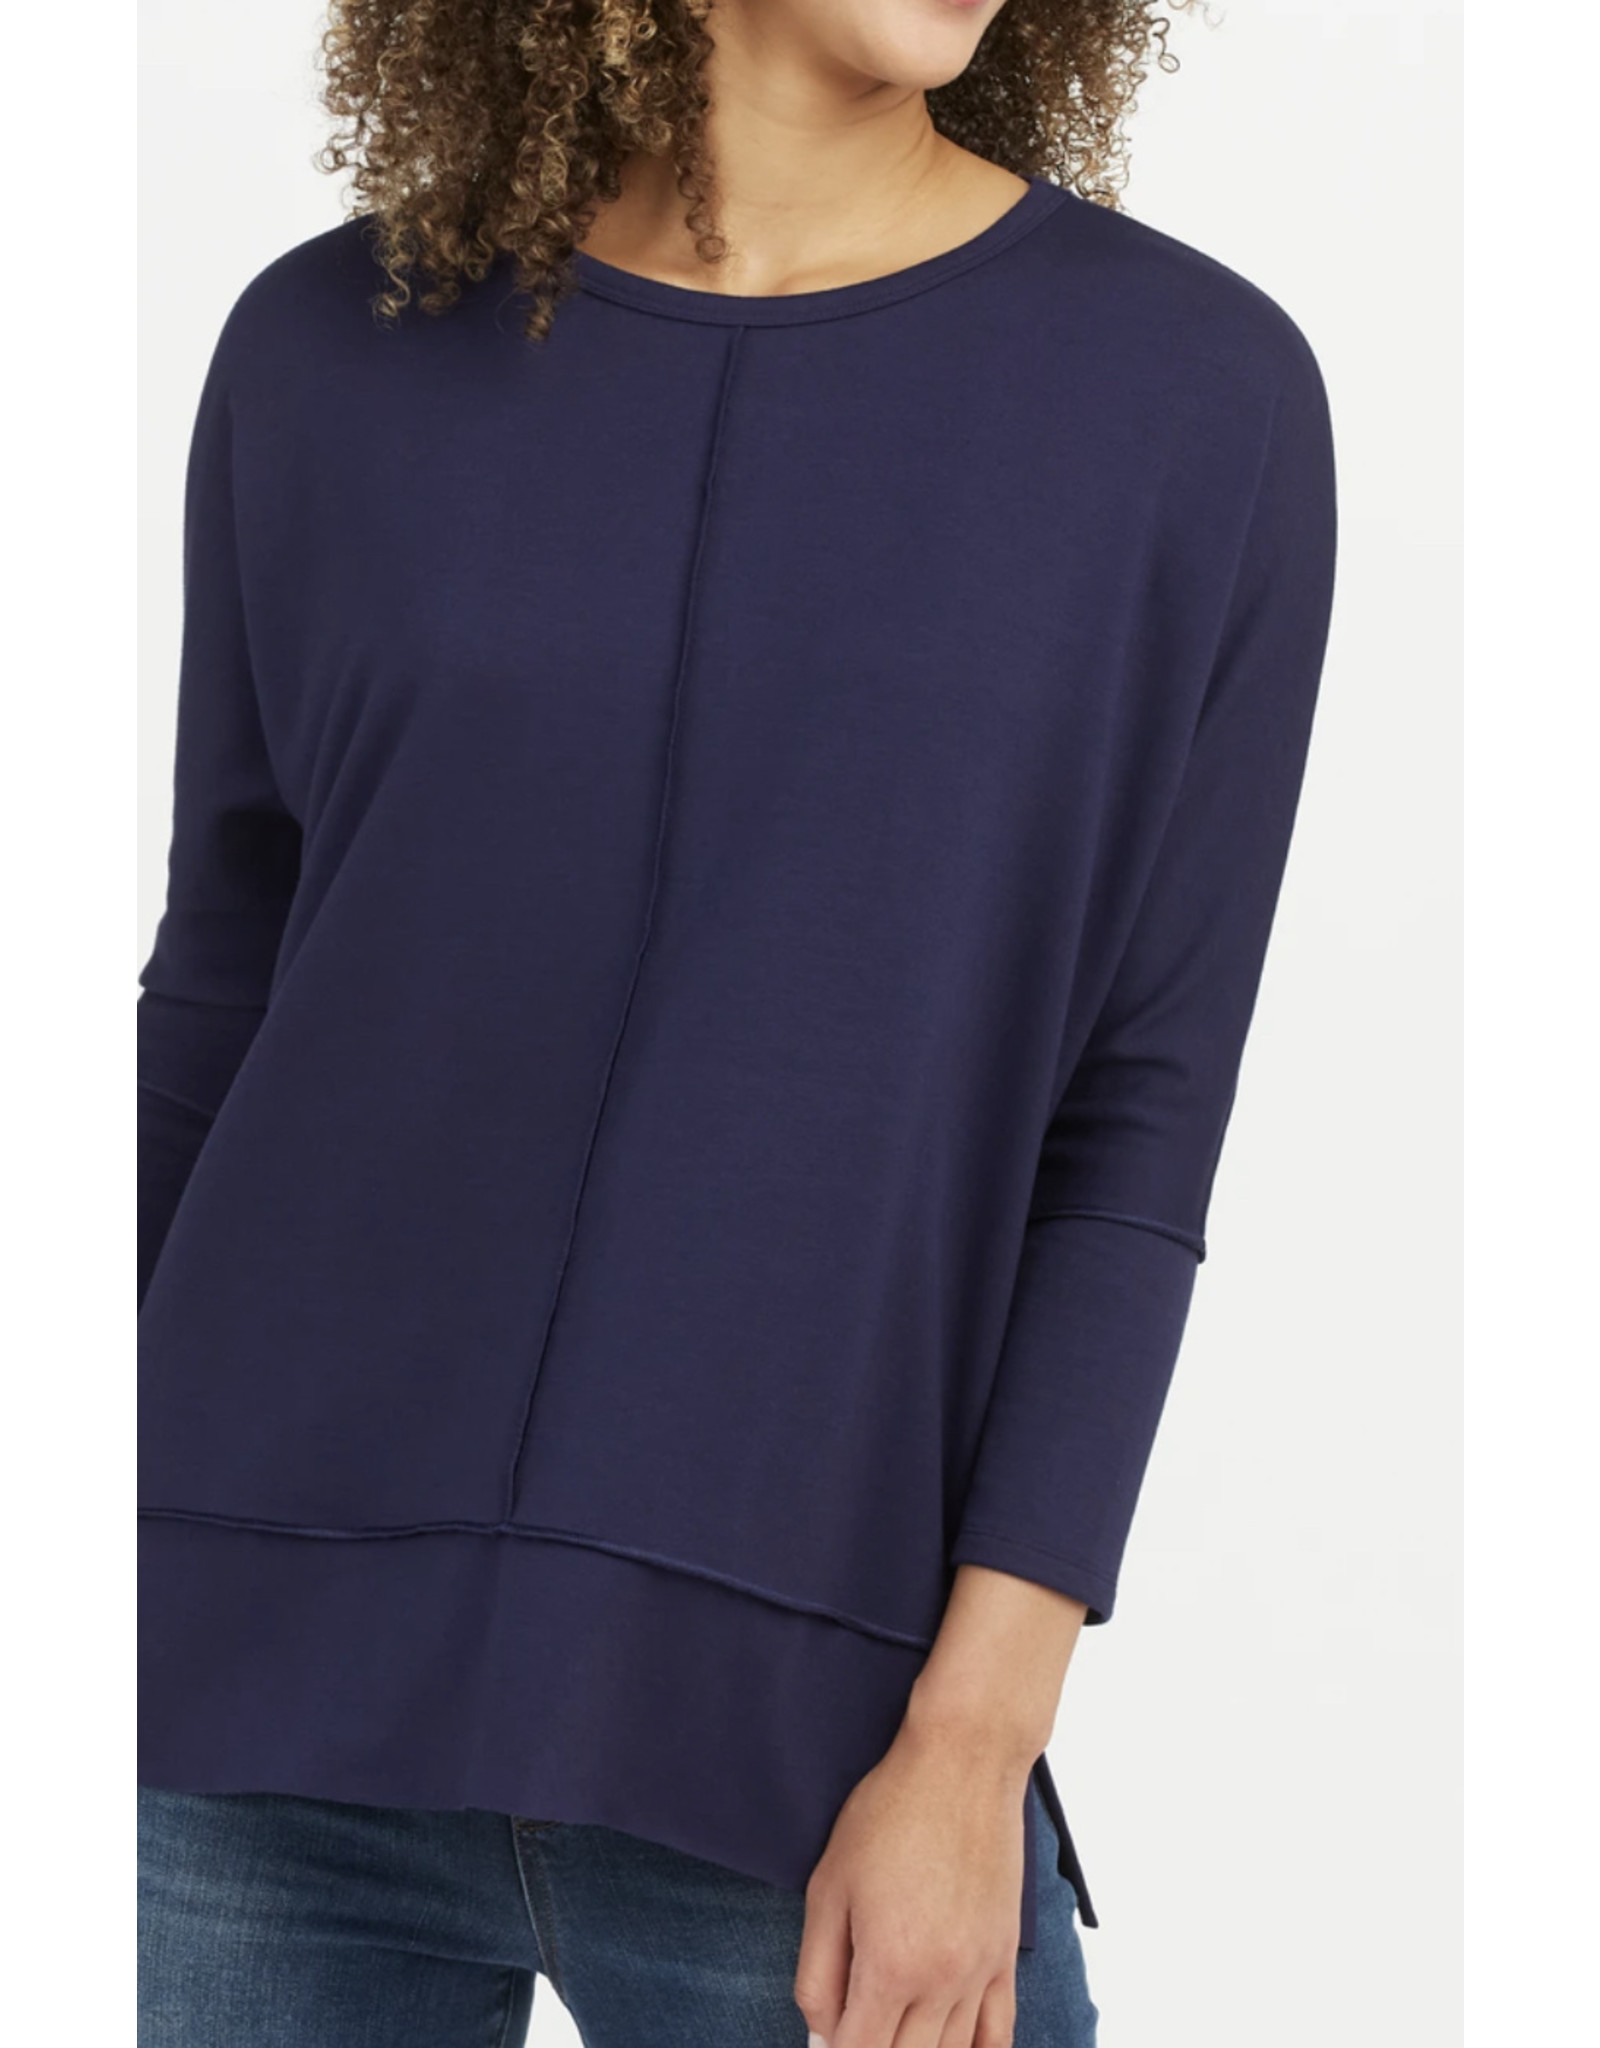 Spanx Perfect Length Dolman Sweatshirt - Black - $68.00 – Hand In Pocket